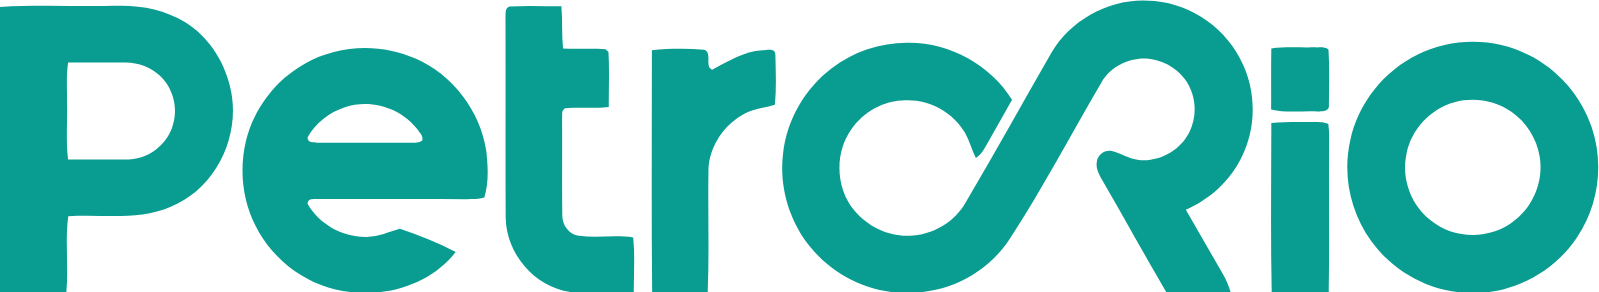 Petro Rio logo large (transparent PNG)